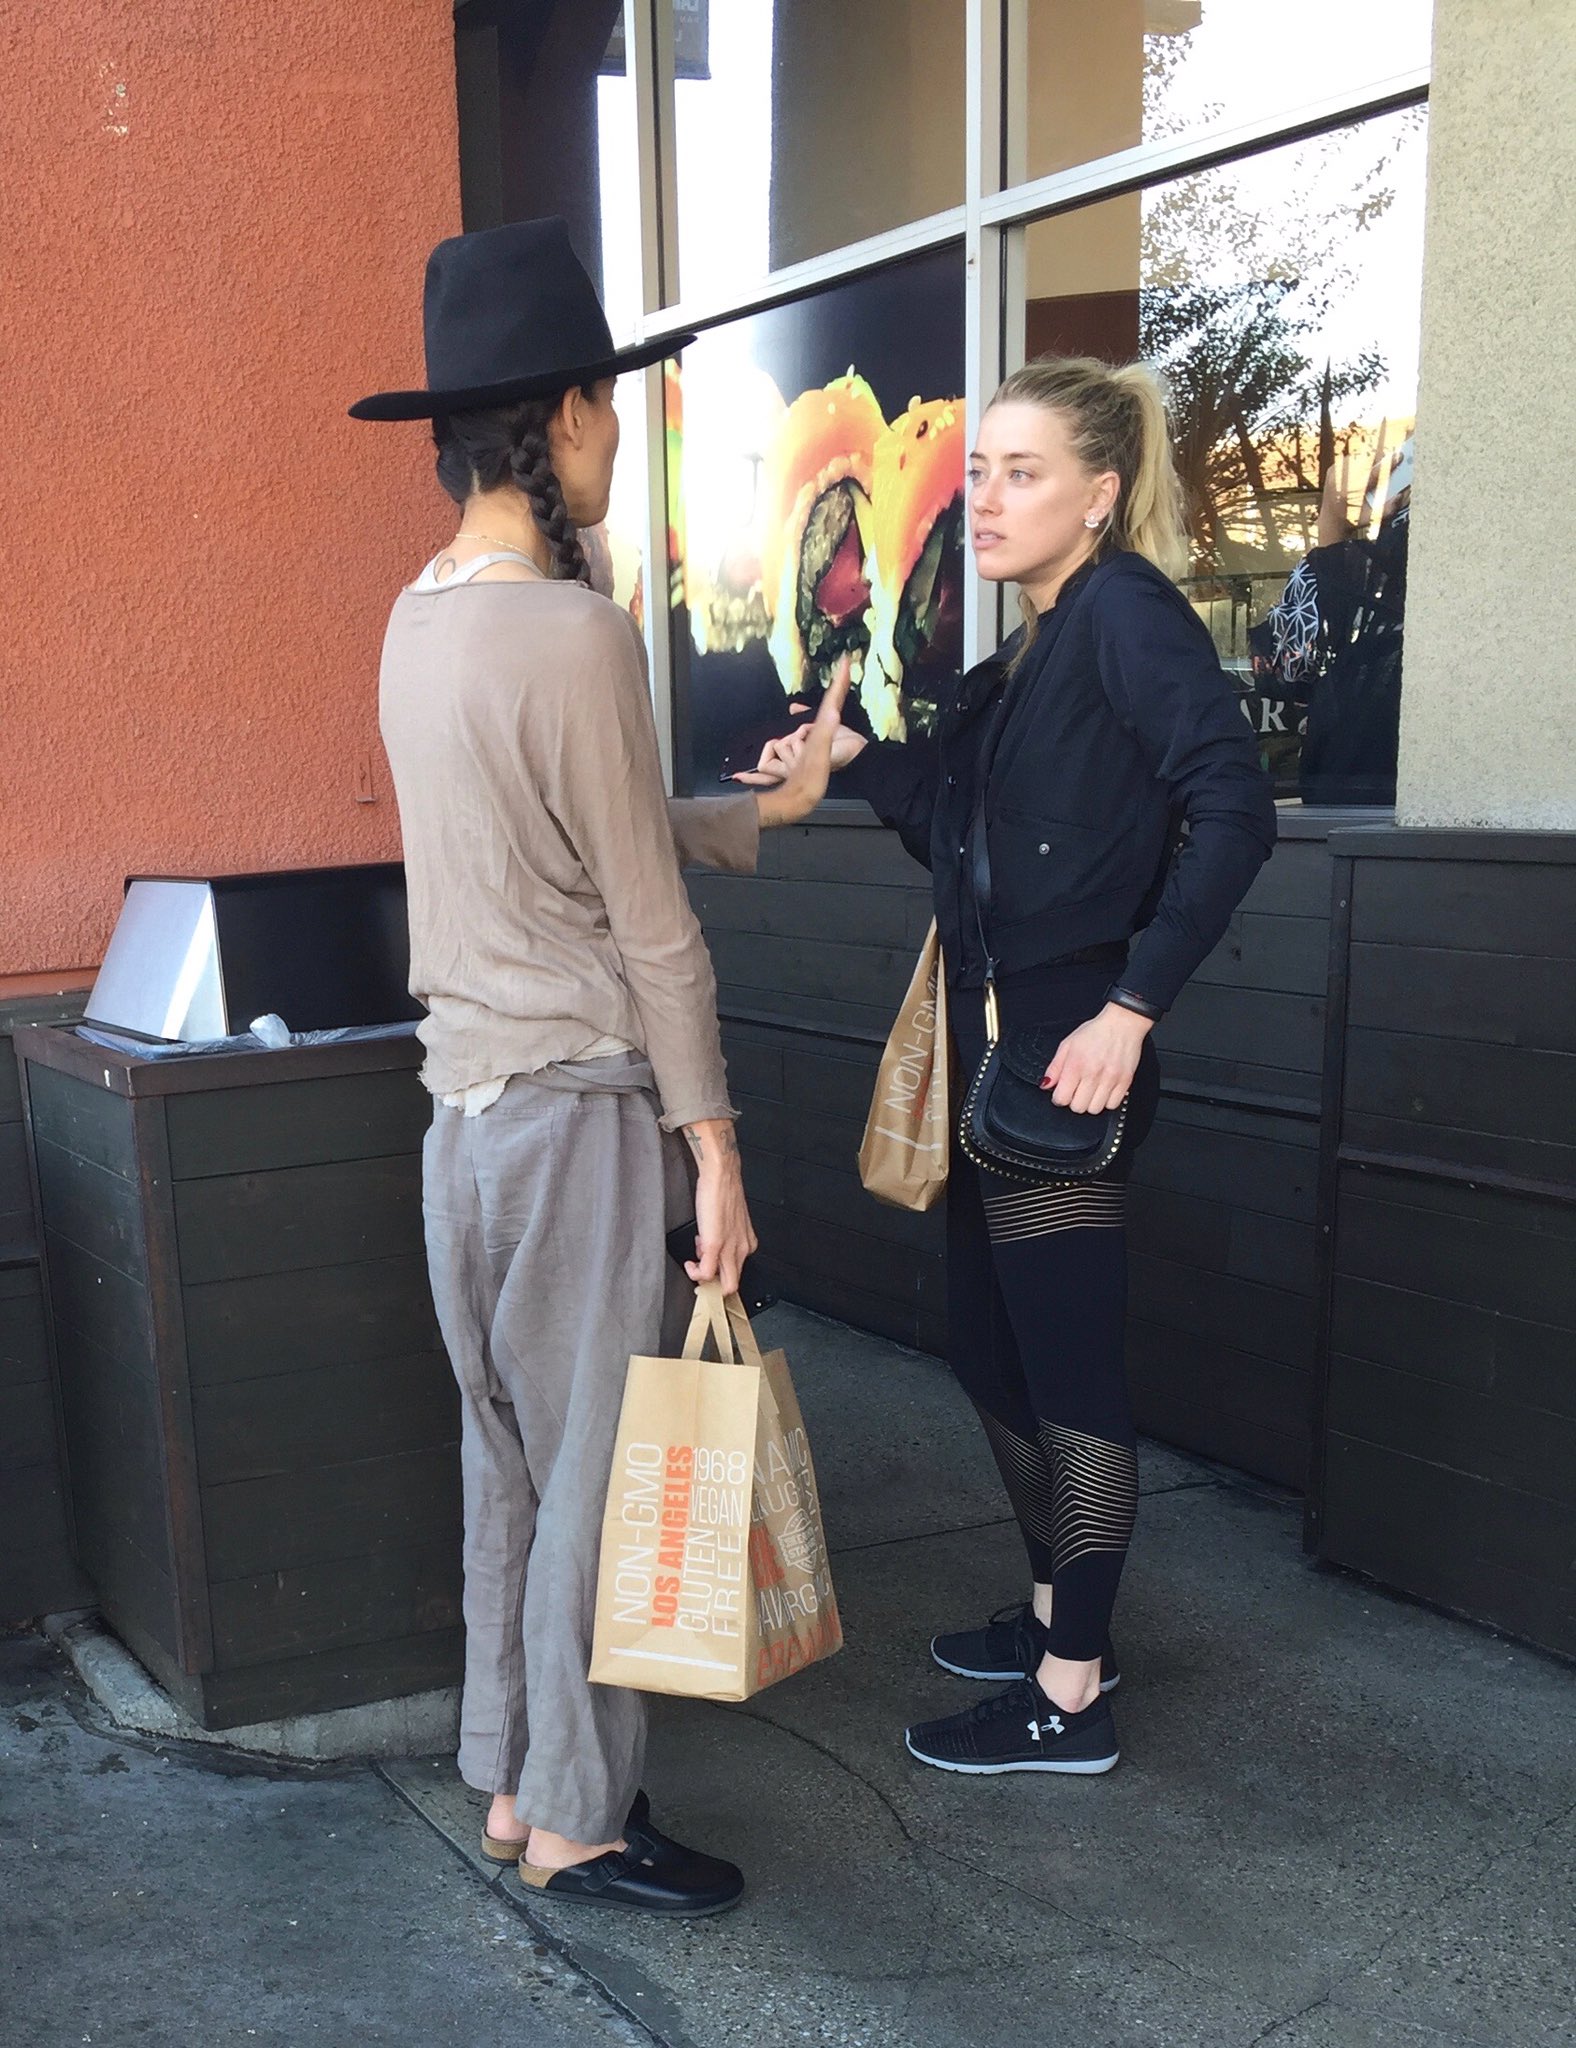 Amber Heard USA on X: "UHQs | March 13th: Amber Heard and Tasya Van Ree  meet up in Los Angeles, CA https://t.co/4TbvaRn8xo https://t.co/jDopoY0sgu"  / X